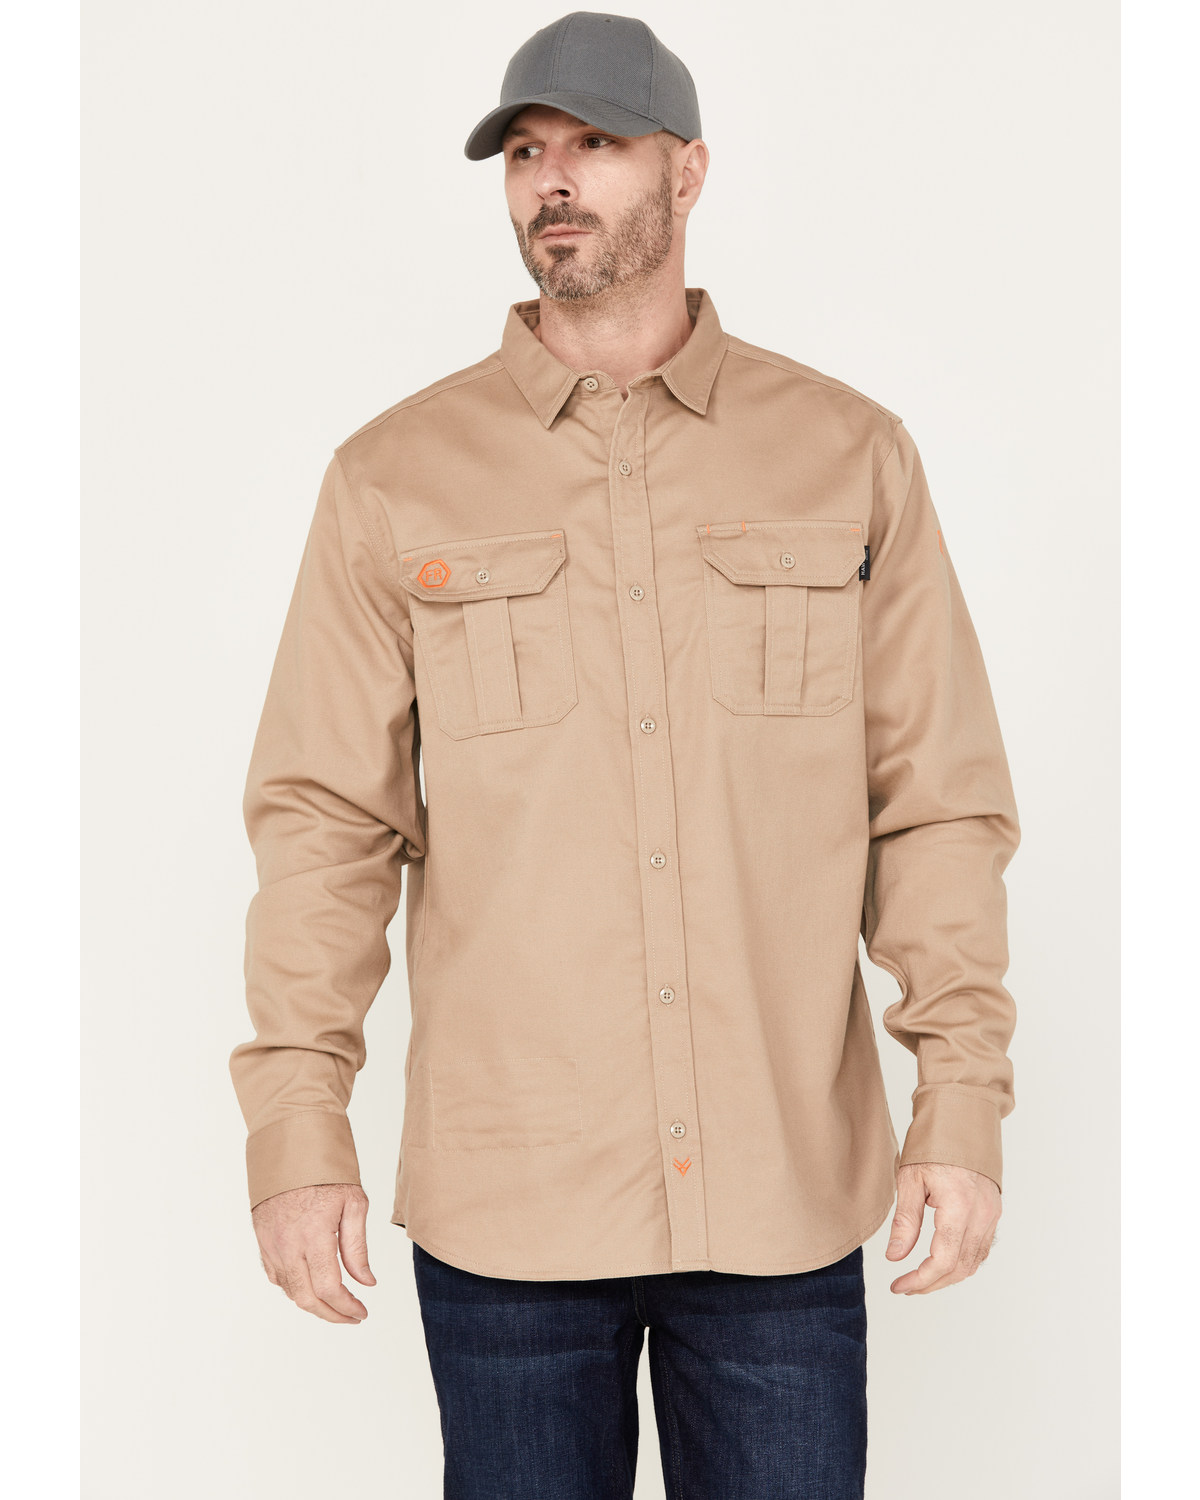 Hawx Men's FR Solid Long Sleeve Button-Down Woven Work Shirt